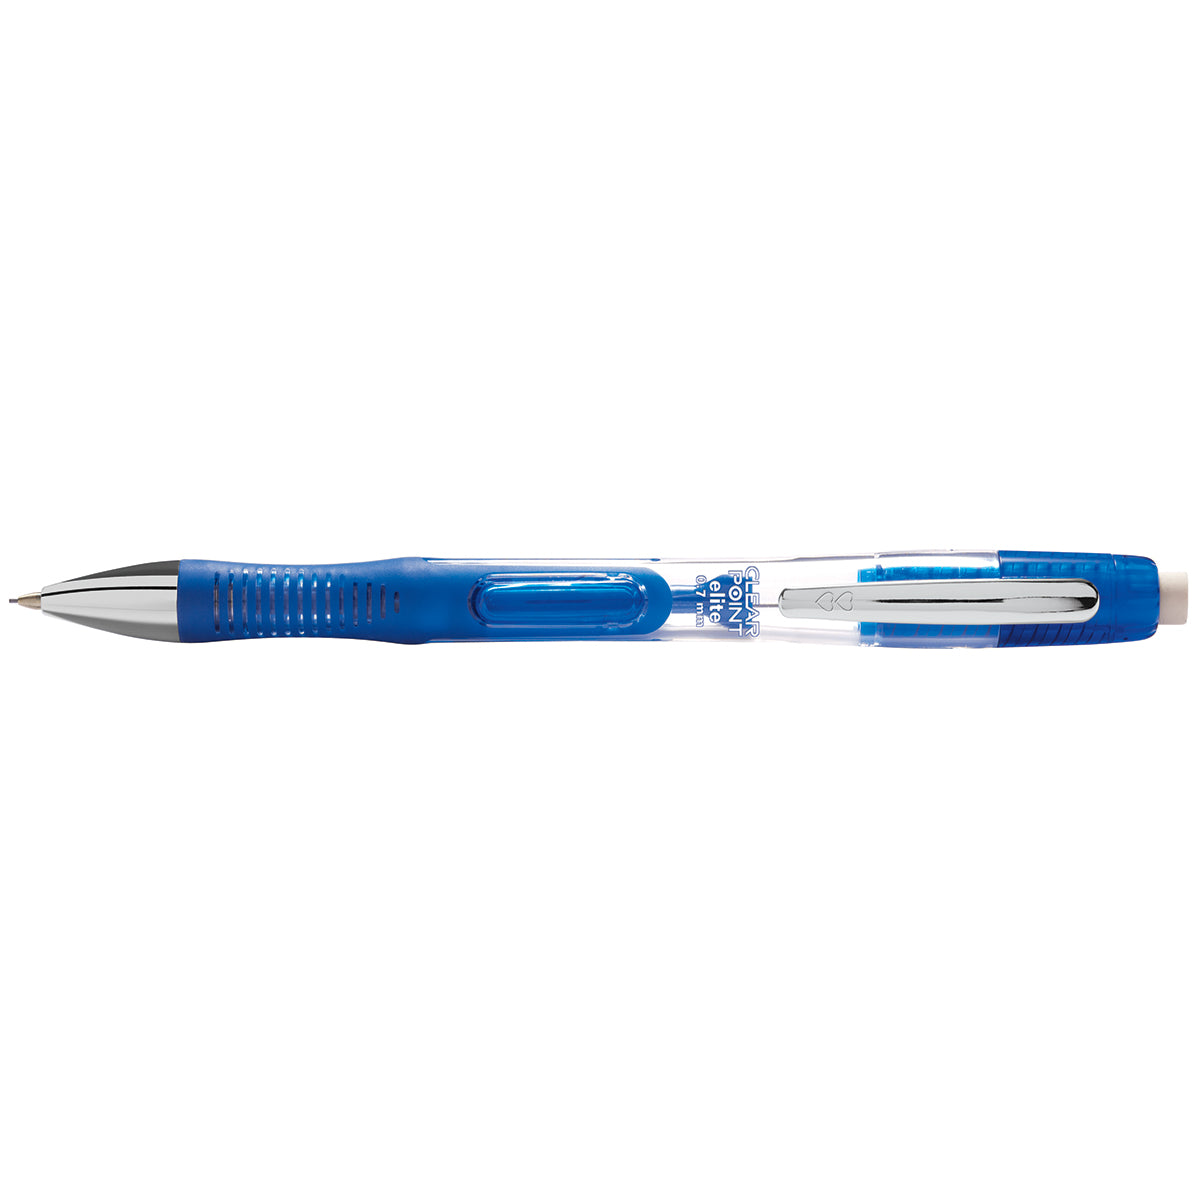 Jumbo Pencil - Pen to Ink